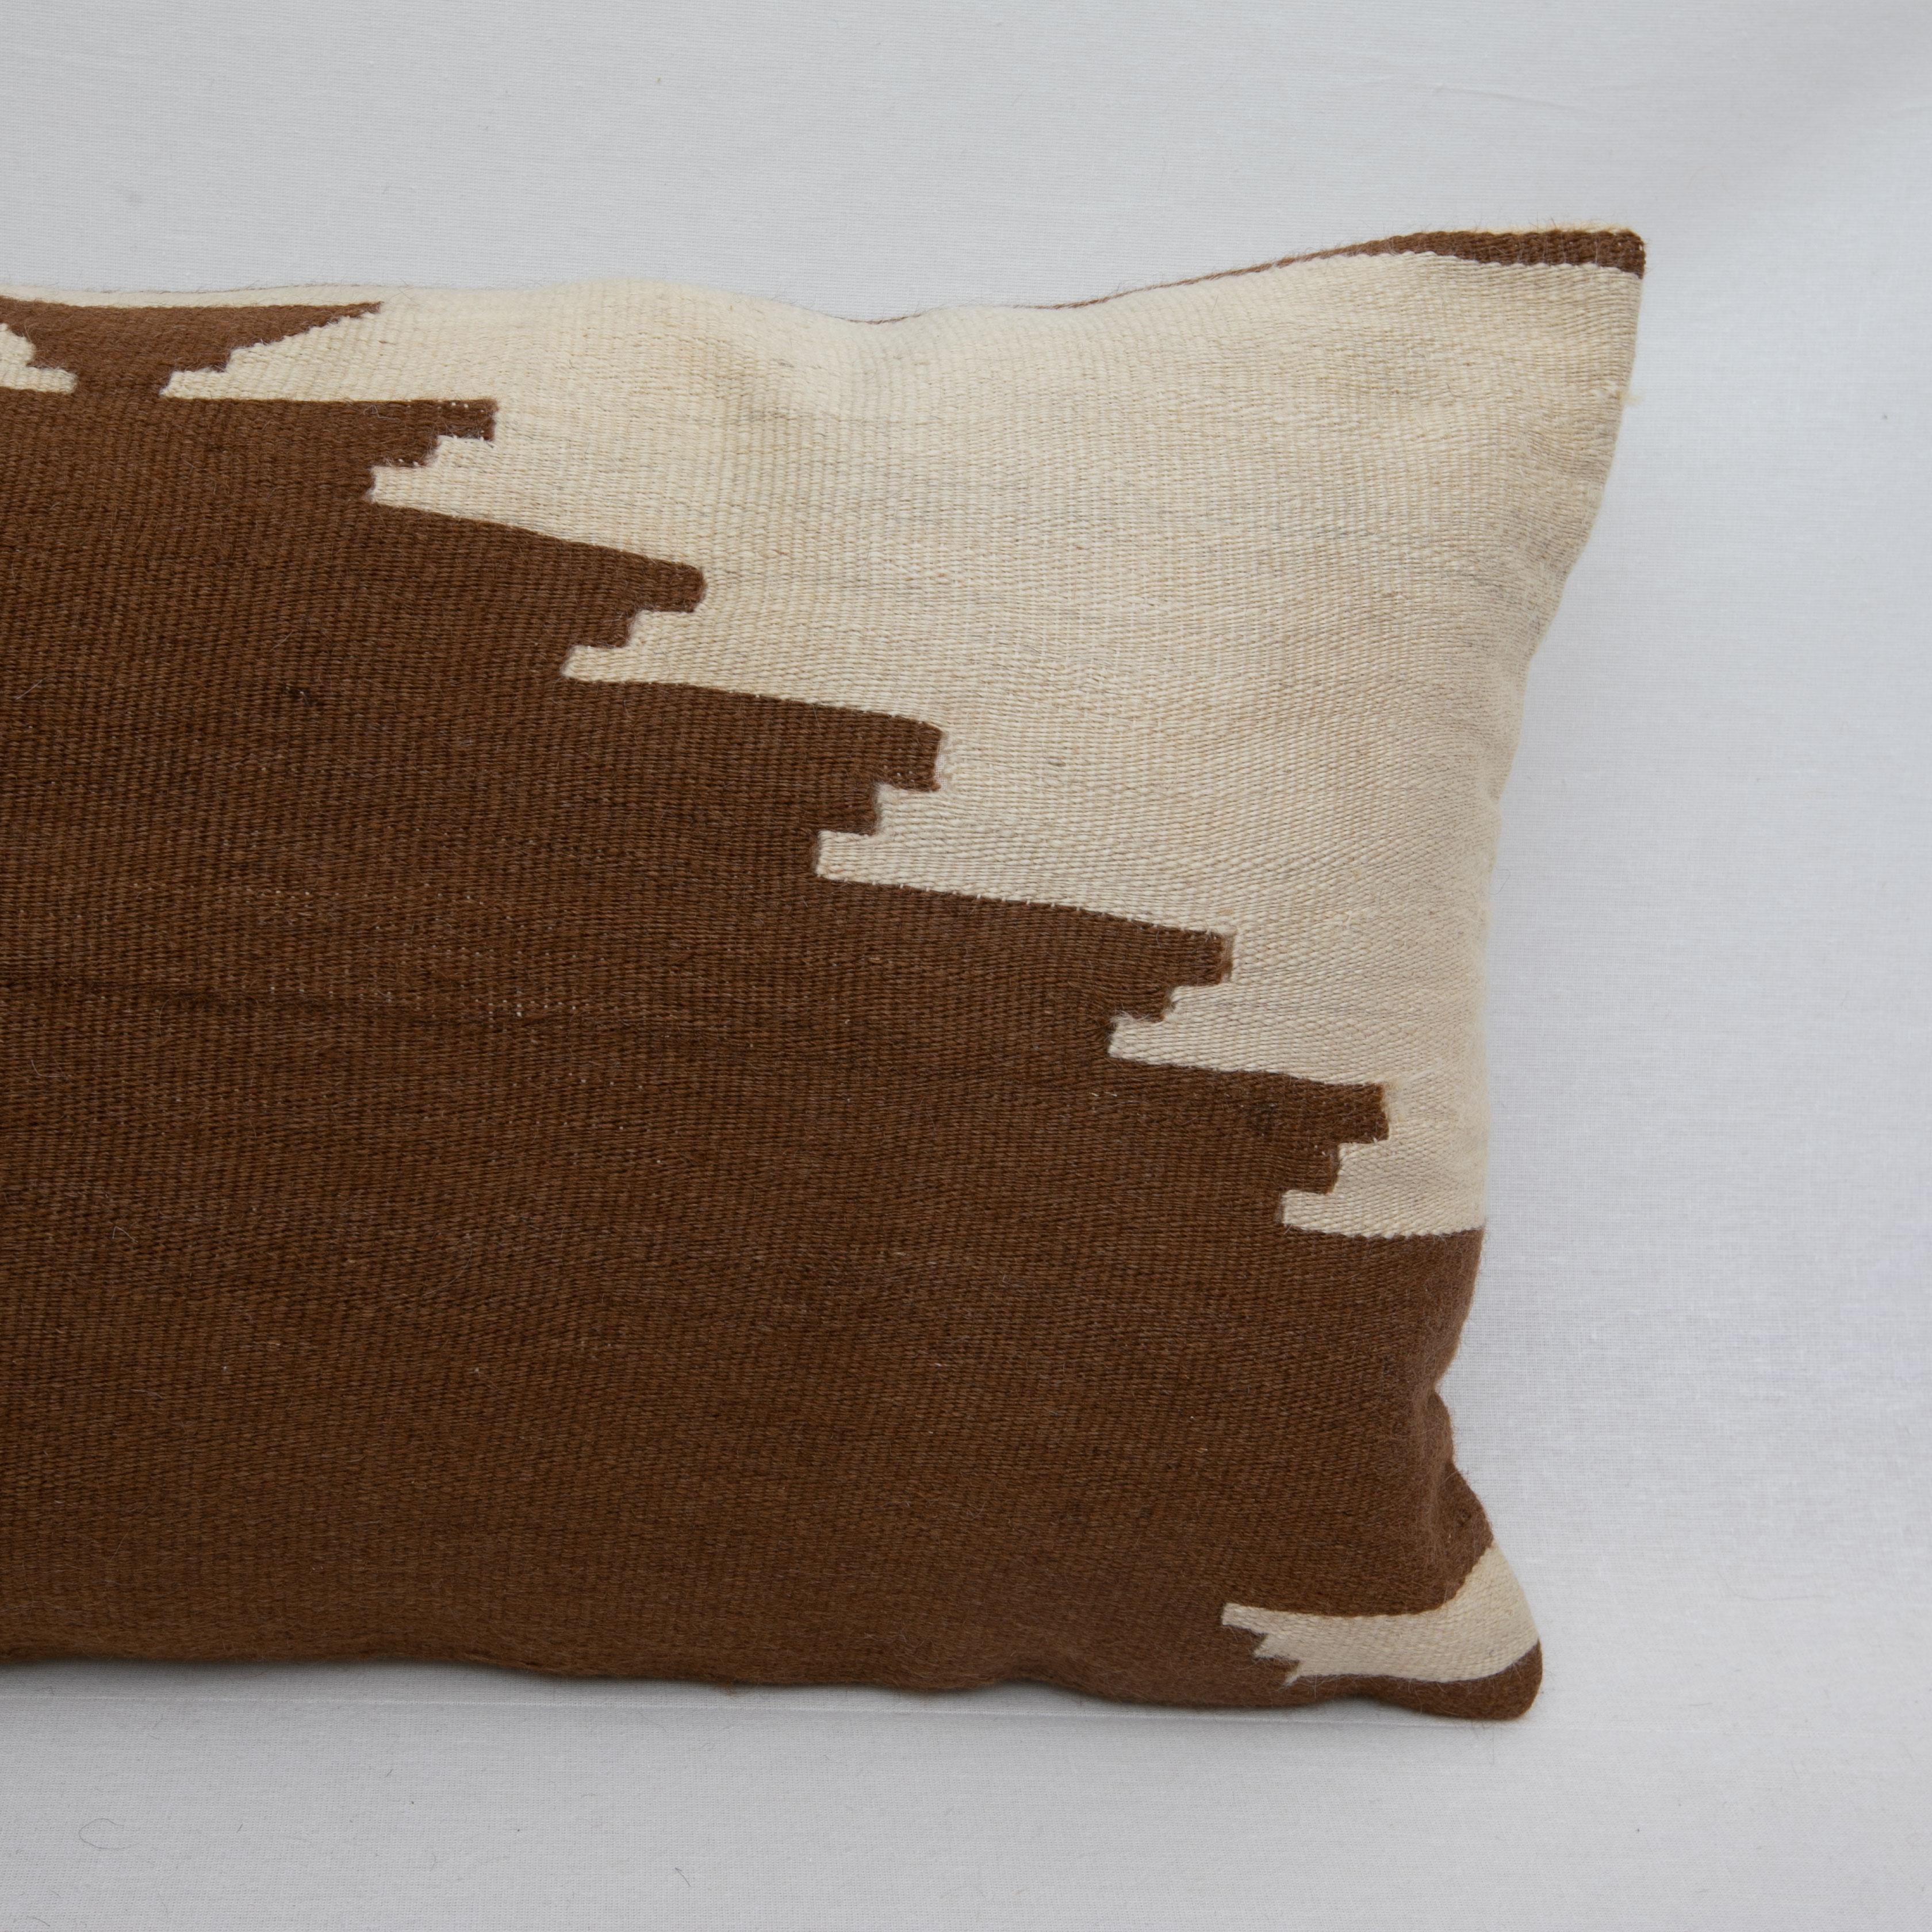 Hand-Woven Angora/ Mohair Siirt Blanket Pillow Cover, 1960s/70s